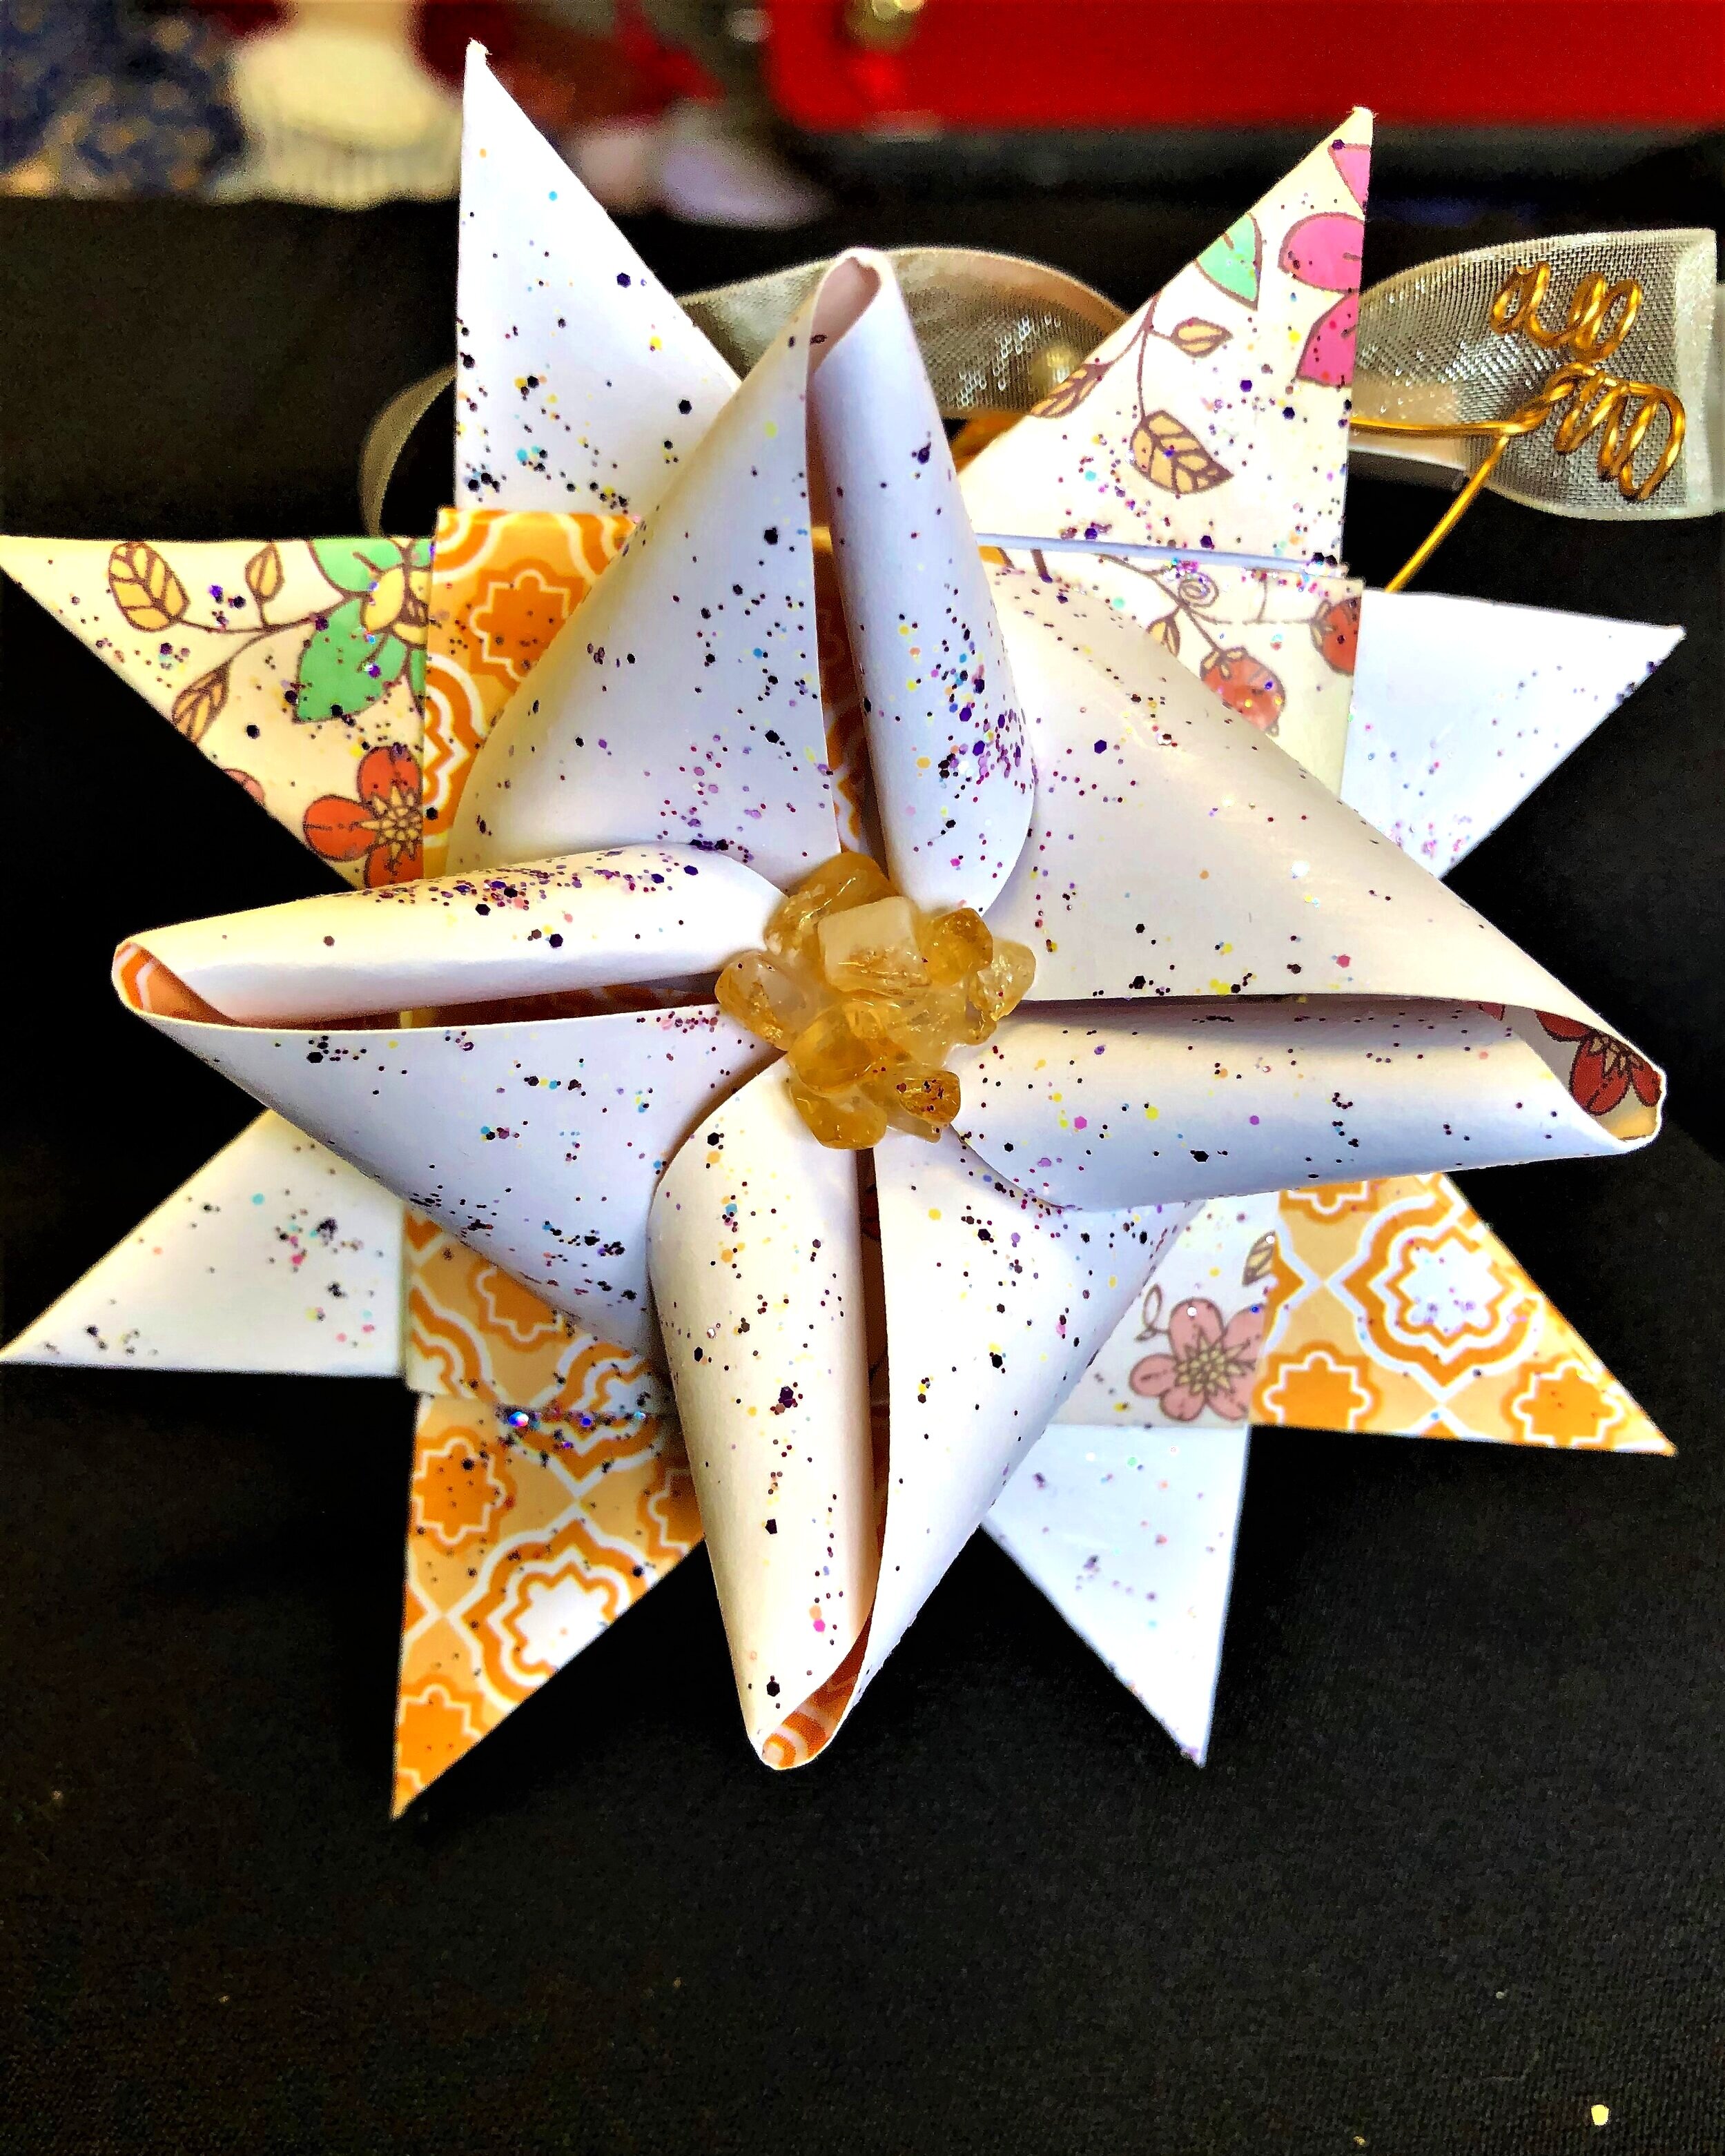 Fabric Origami star Christmas ornaments — apple franca